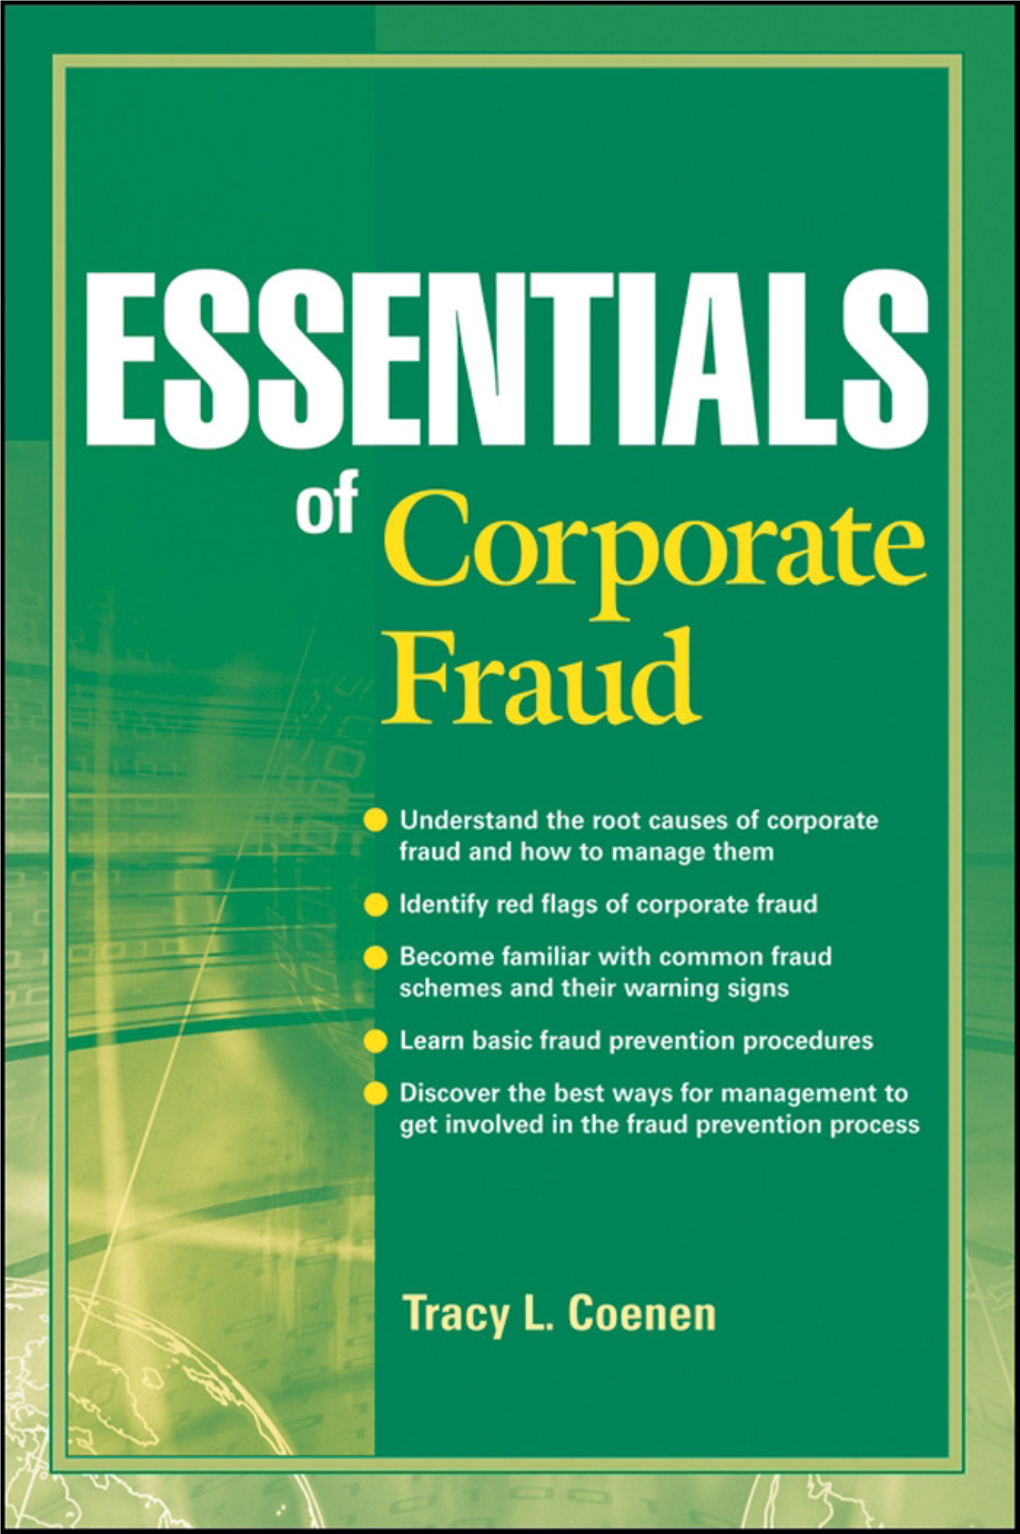 Essentials-Of-Corporate-Fraud047019412x.Pdf